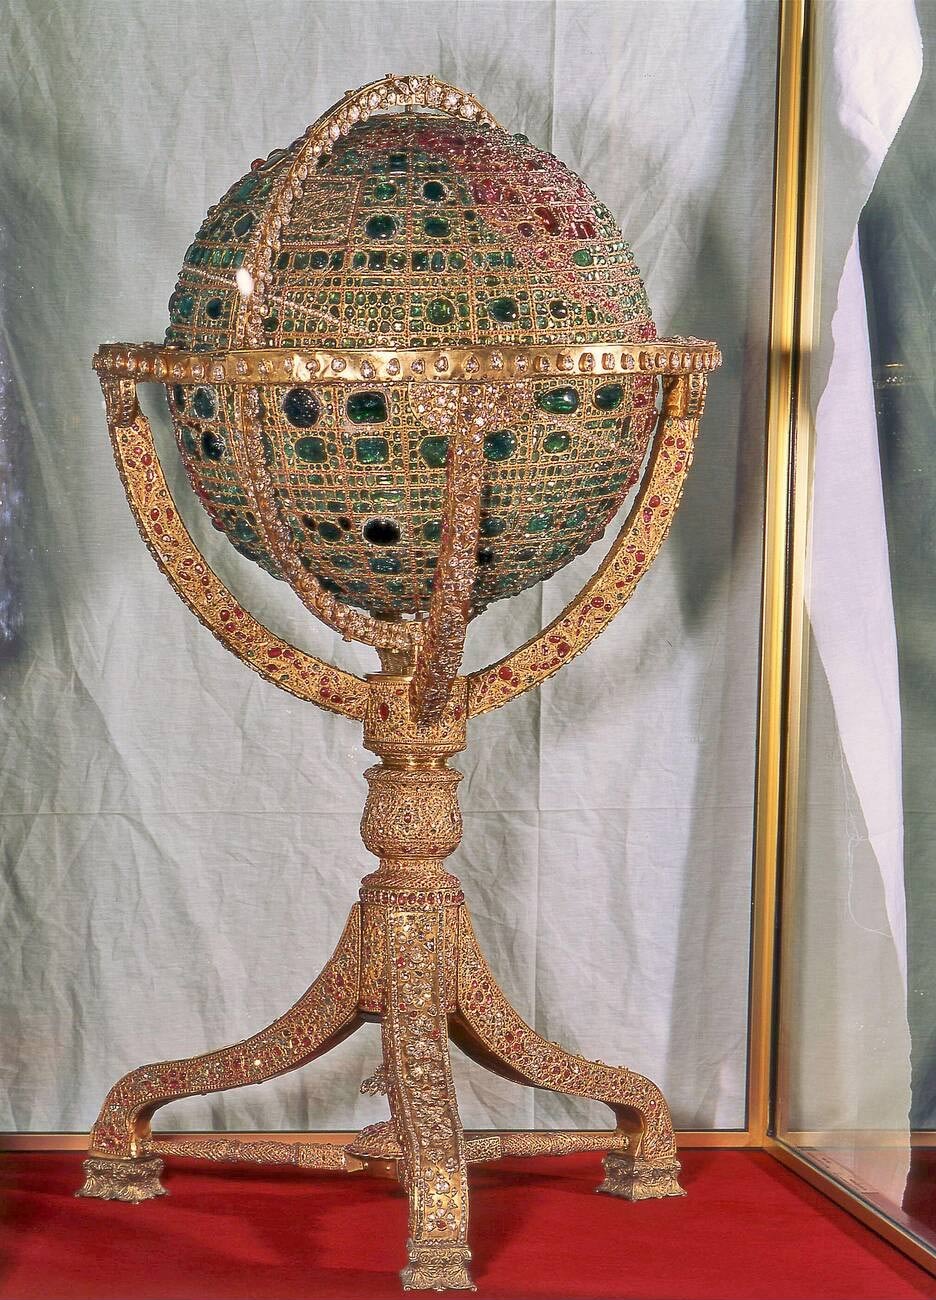 The Emerald Studded Globe